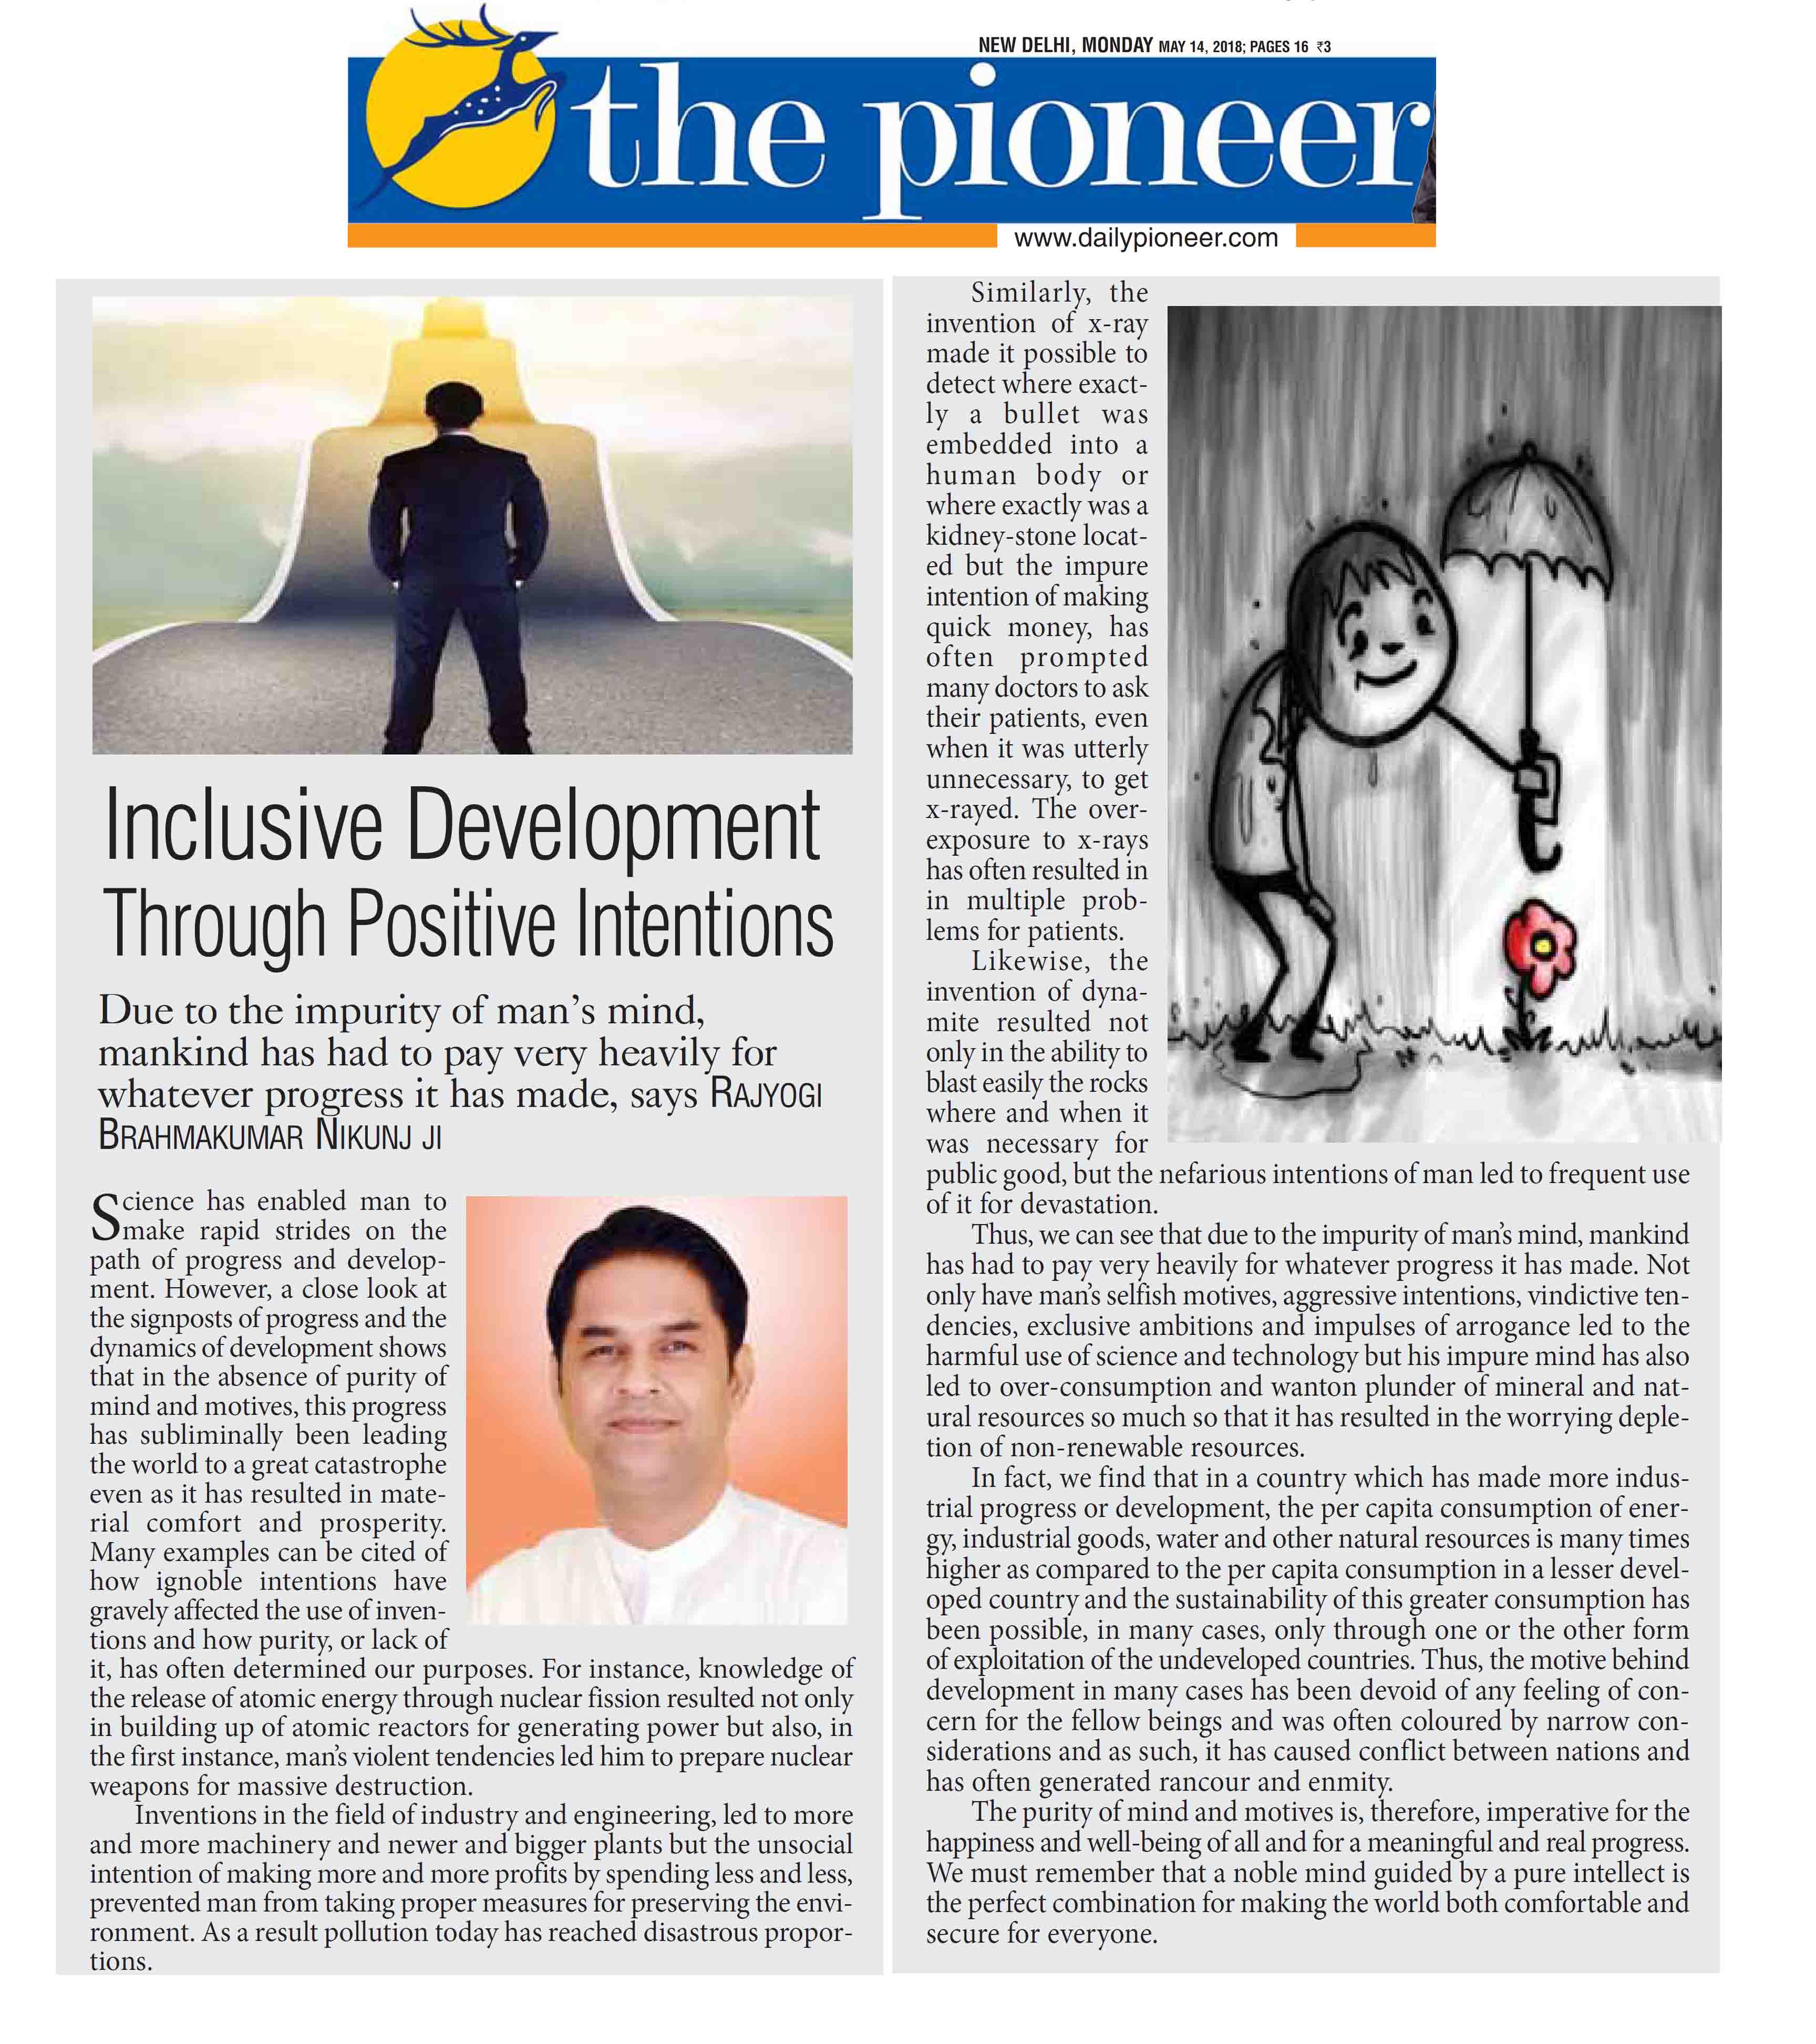 Inclusive Development through positive intensions